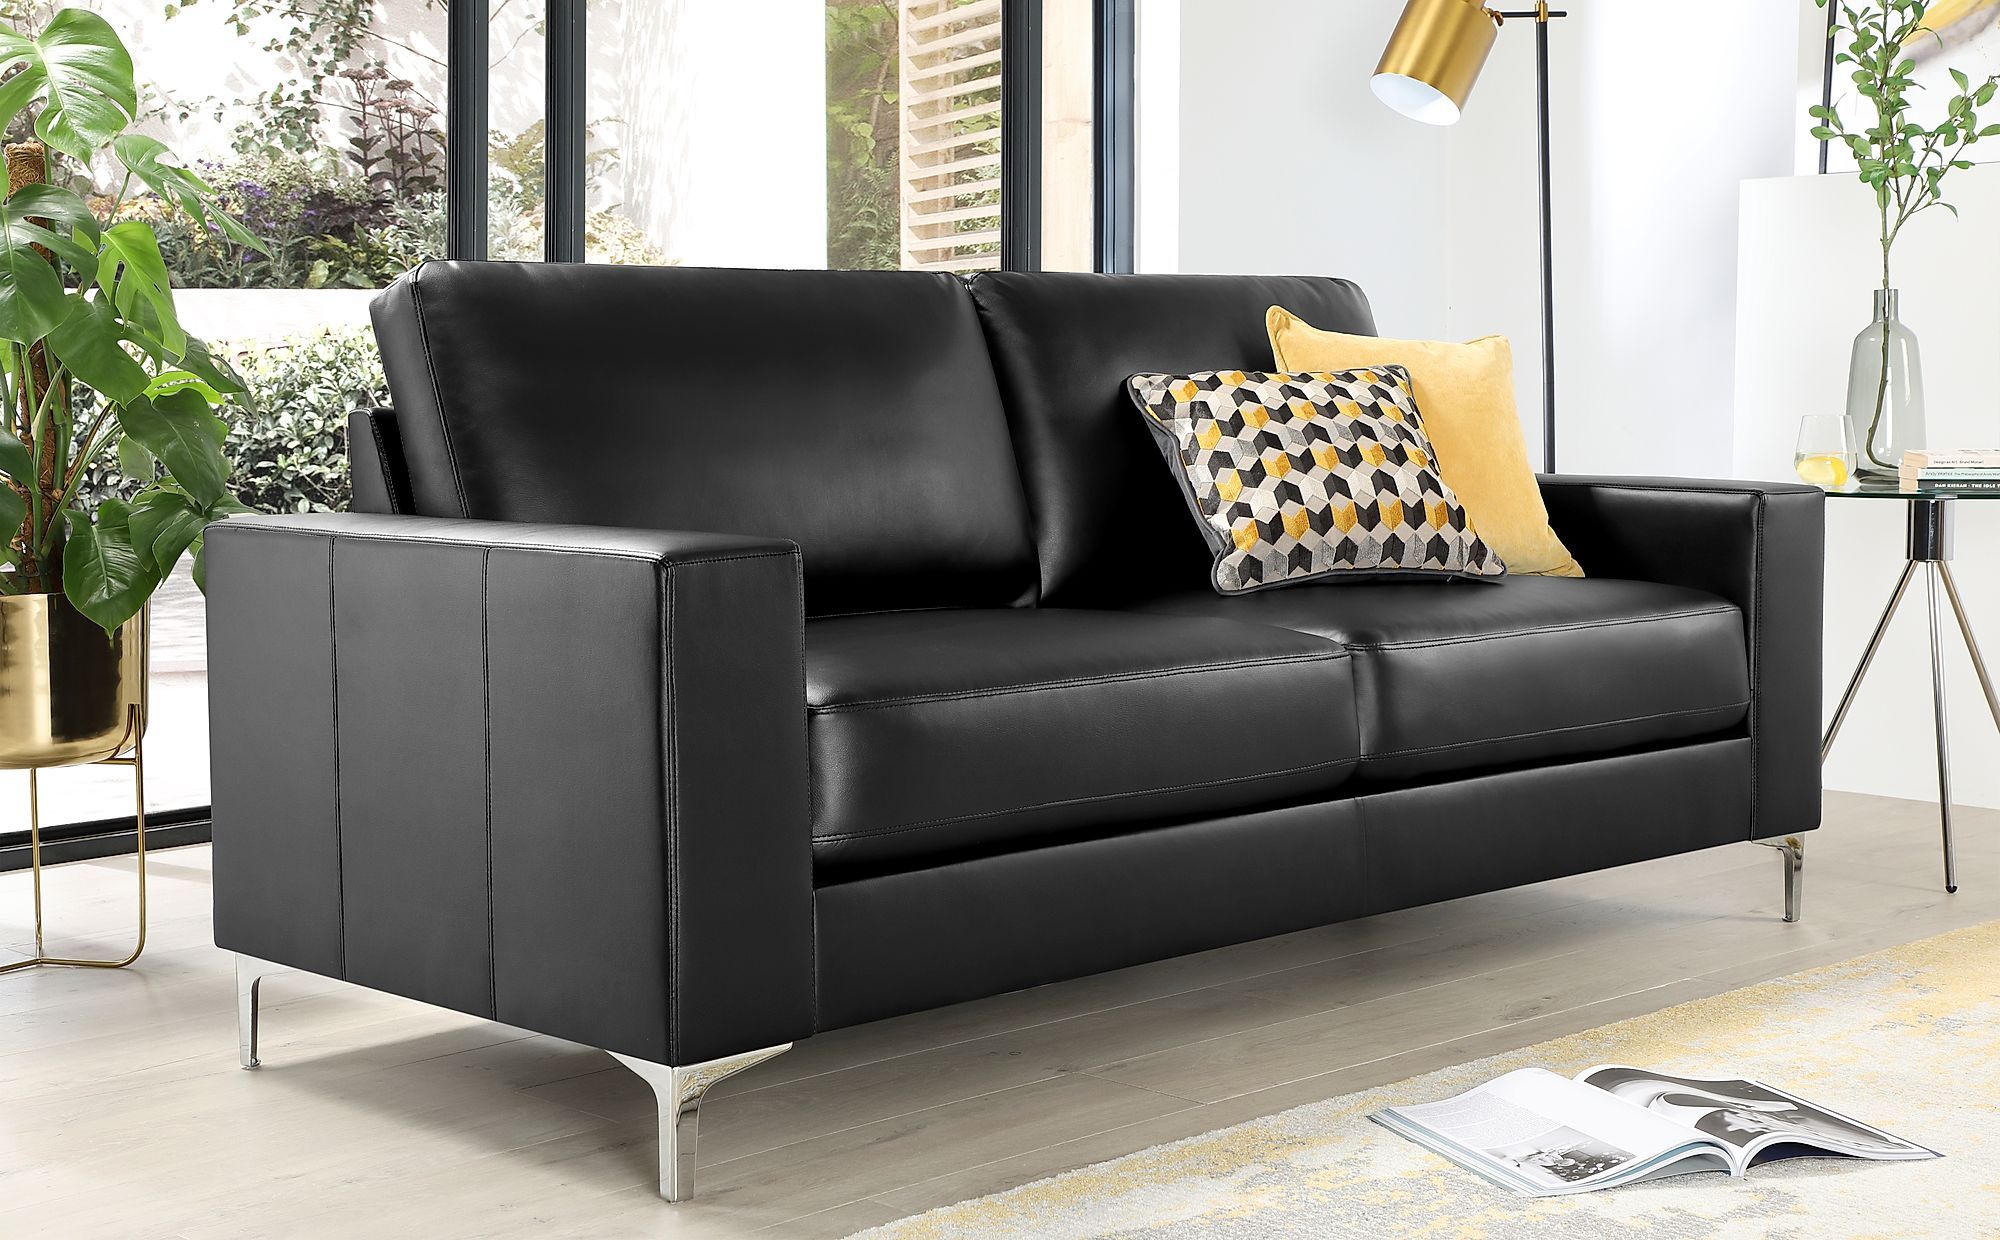 Baltimore Black Leather 3 Seater Sofa | Furniture Choice Regarding 3 Seat L Shaped Sofas In Black (View 8 of 20)